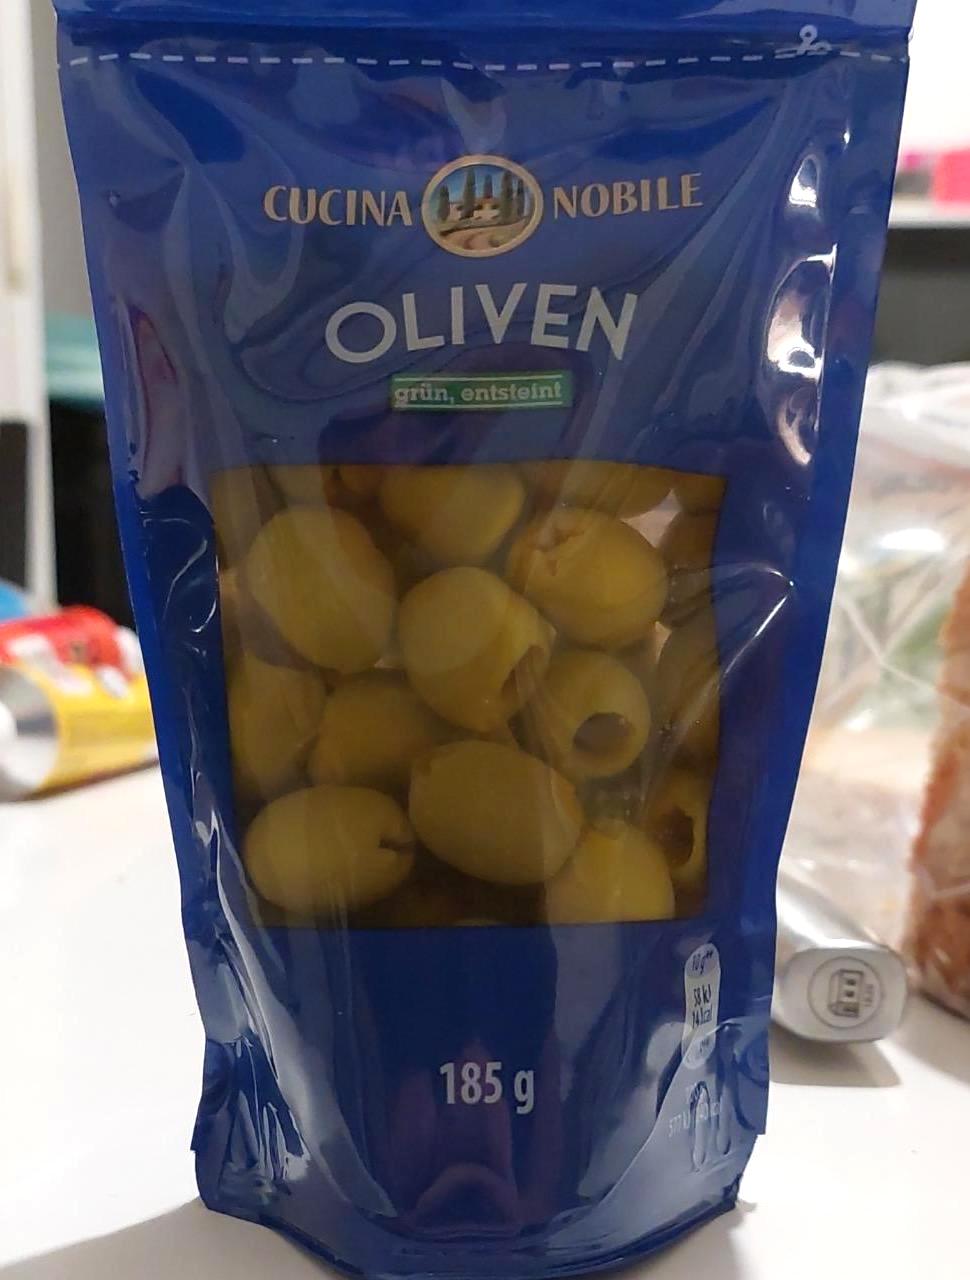 Képek - Oliven oliva bogyó Cucina Nobile